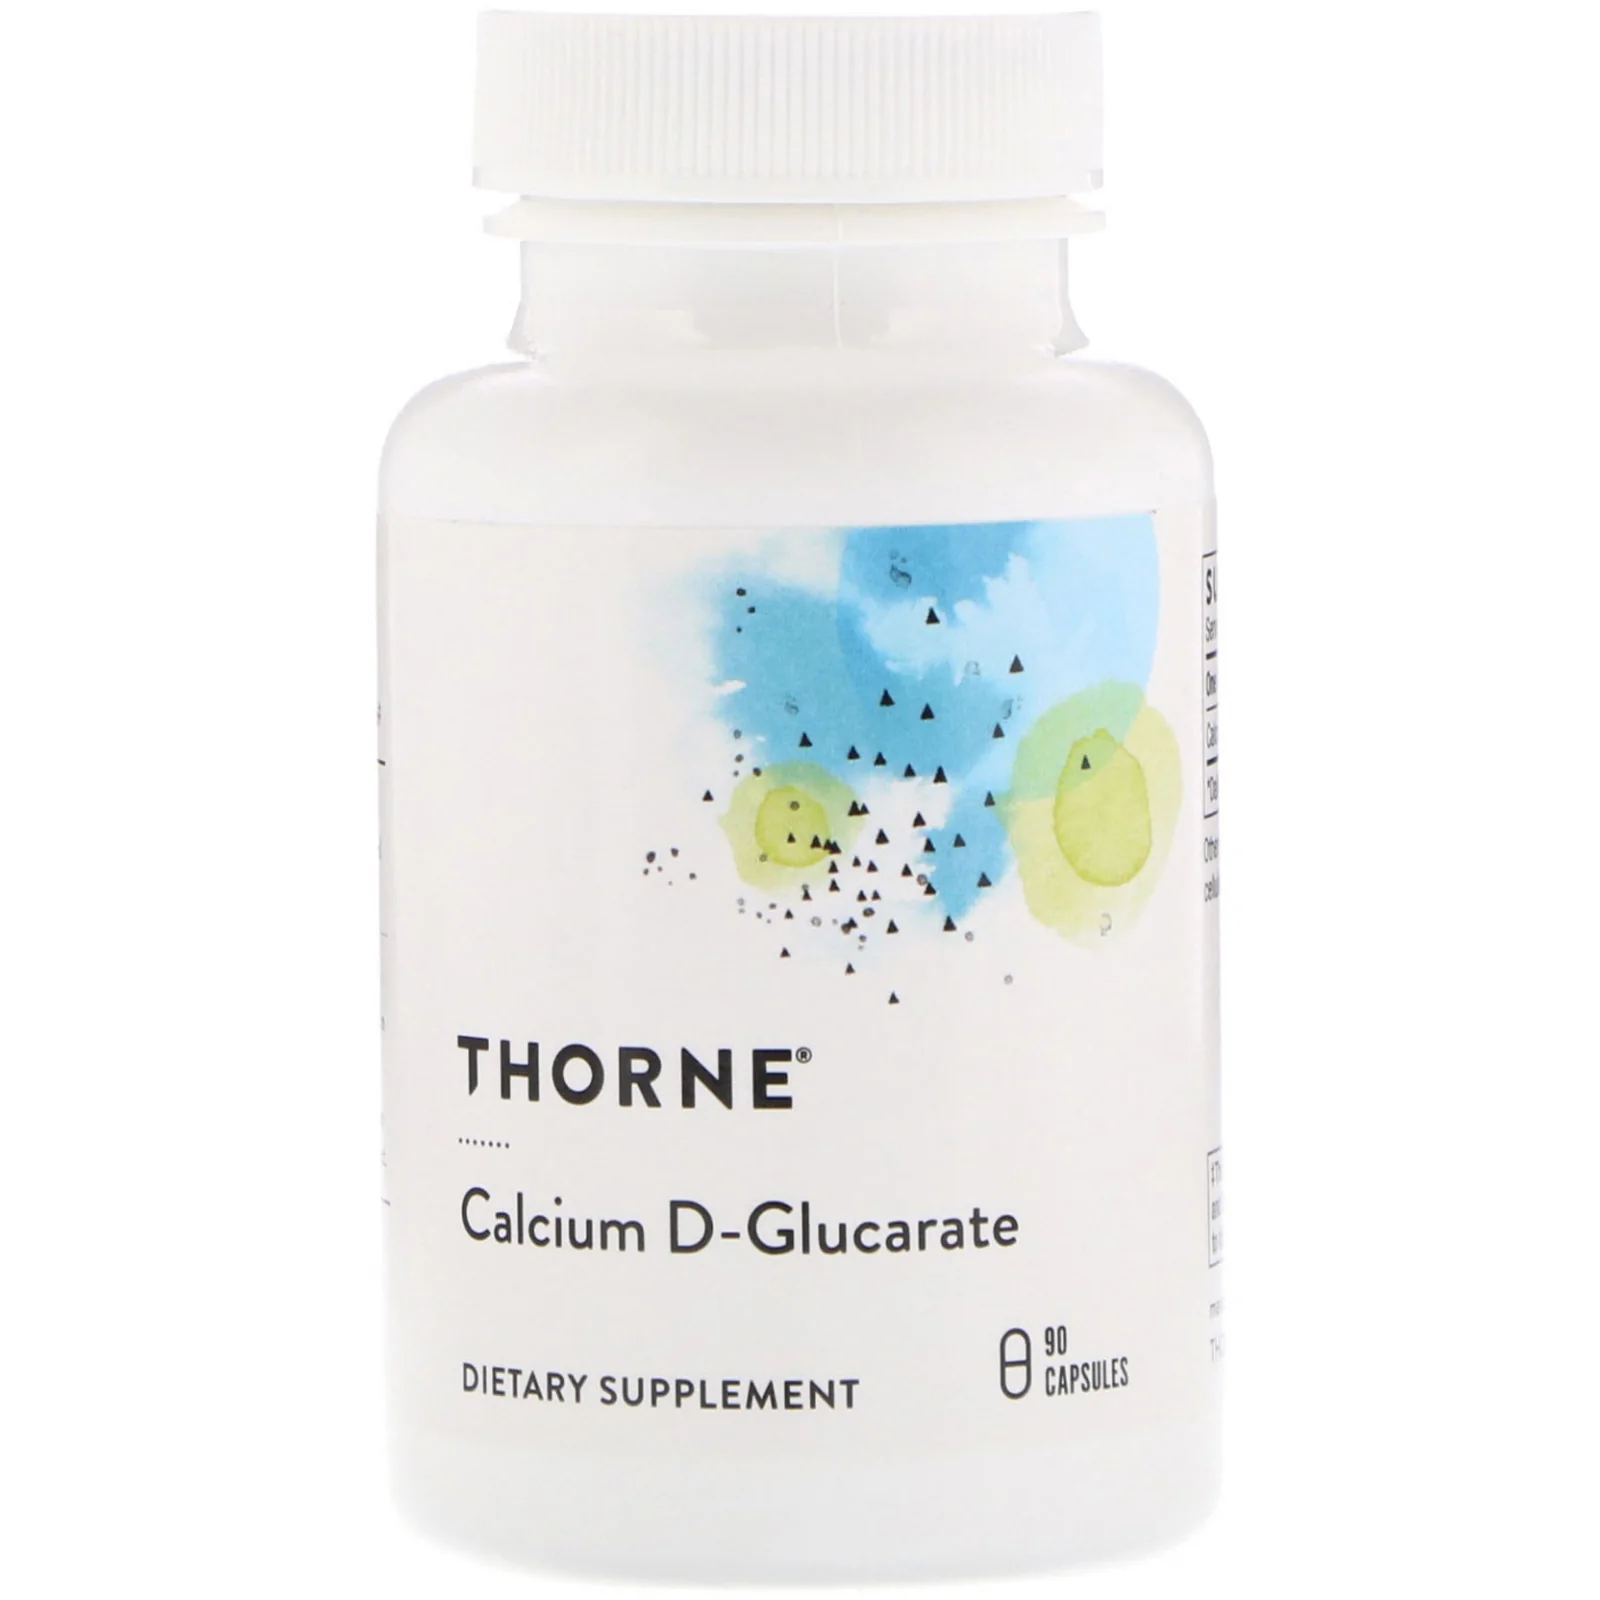 Thorne Calcium D-Glucarate Dietary supplement bottle